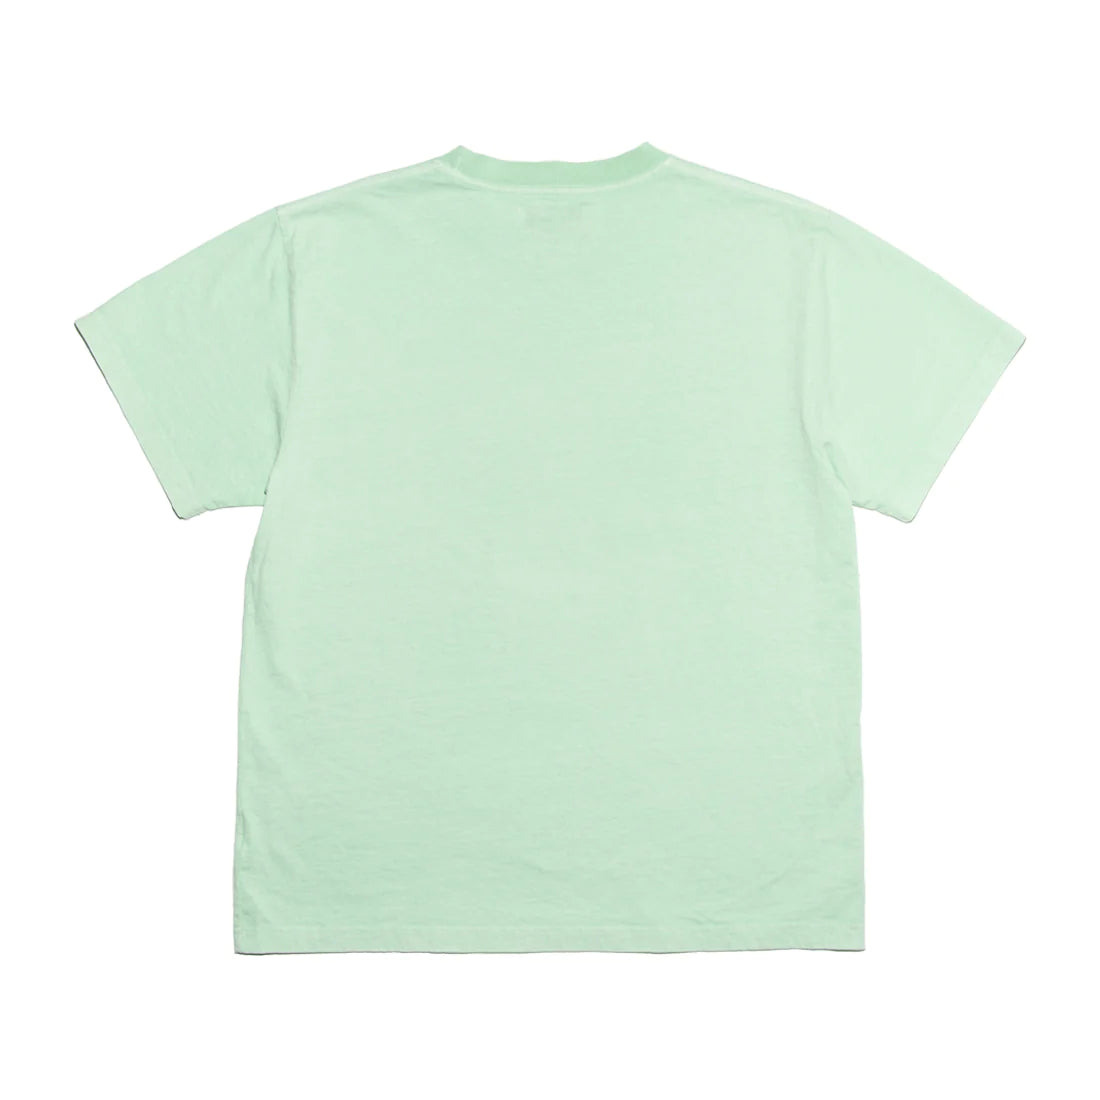 City Trax T-Shirt - Washed Mint